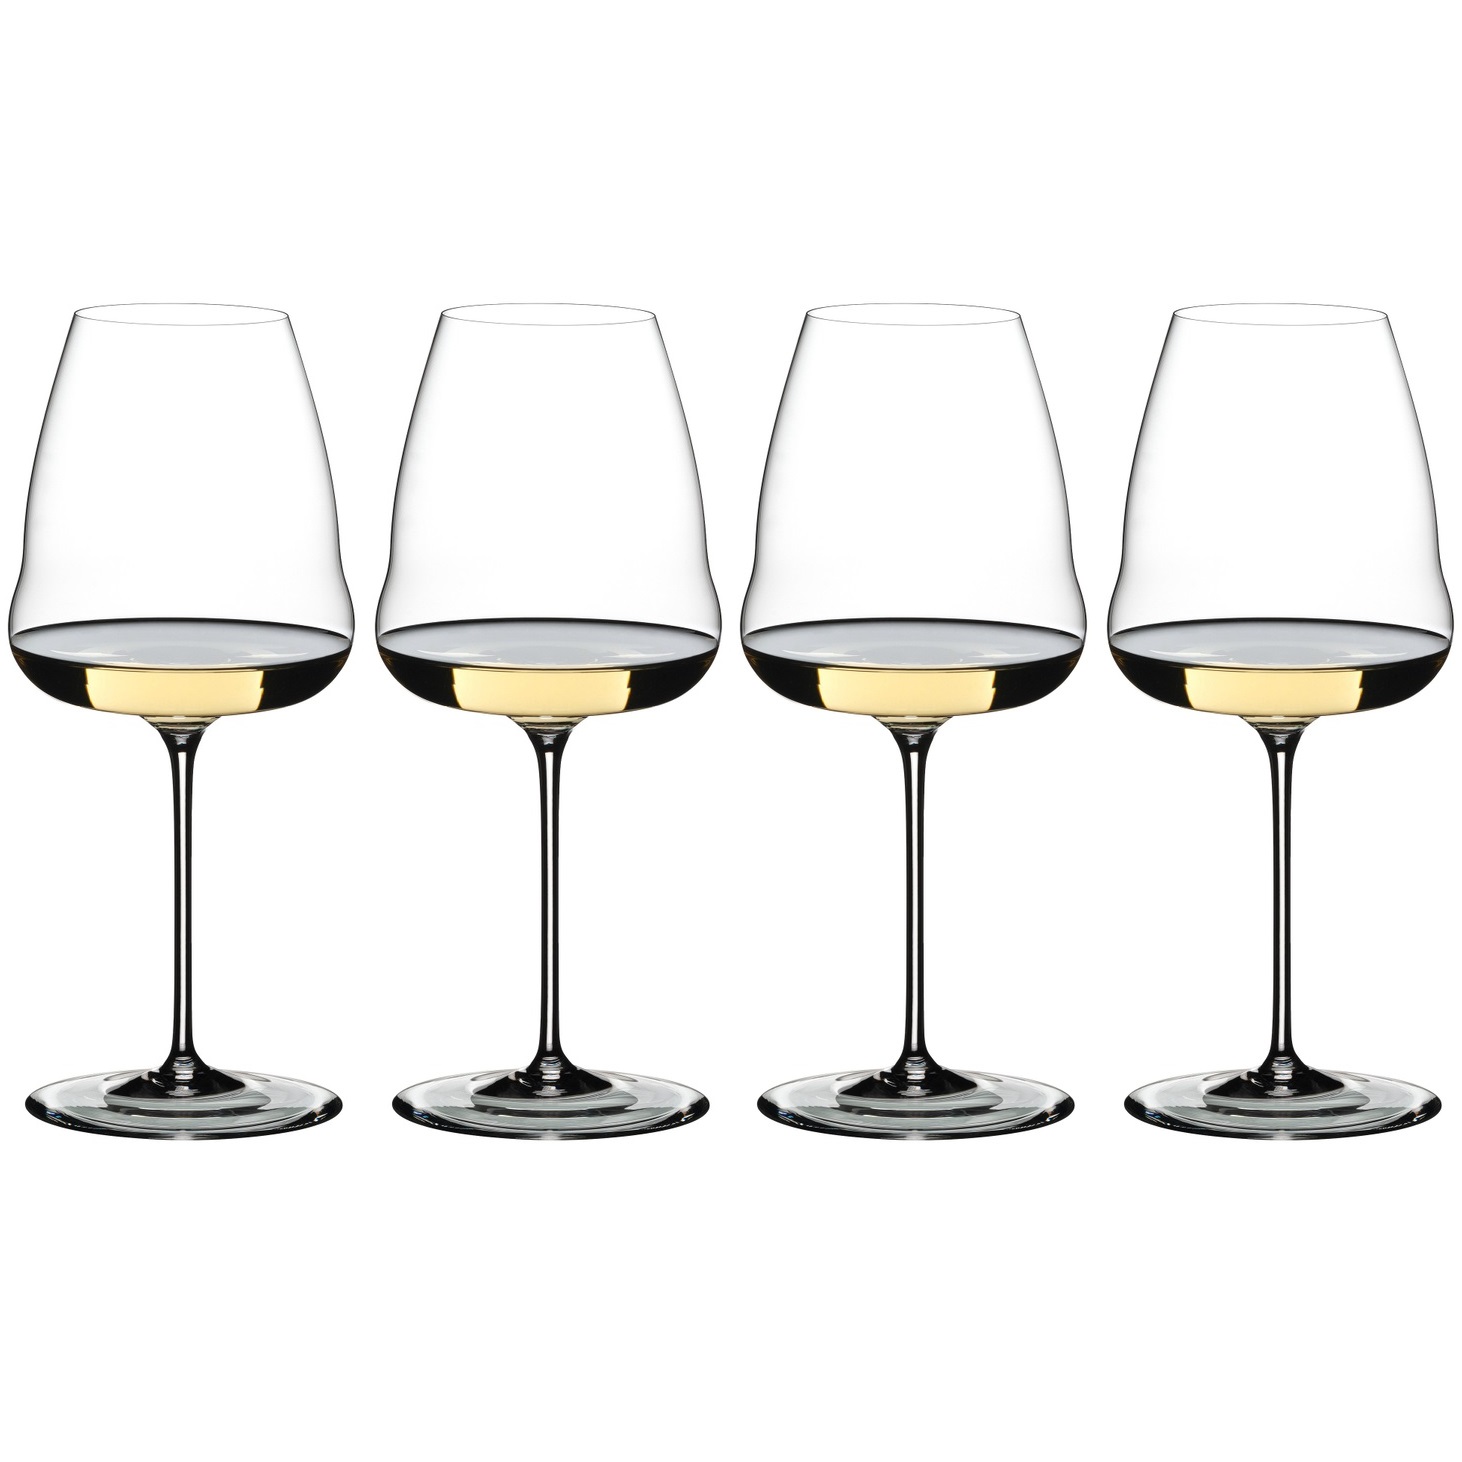 4 бокала для белого вина RIEDEL Winewings Sauvignon Blanc Pay 3 Get 4 742 мл (арт. 5123/33)